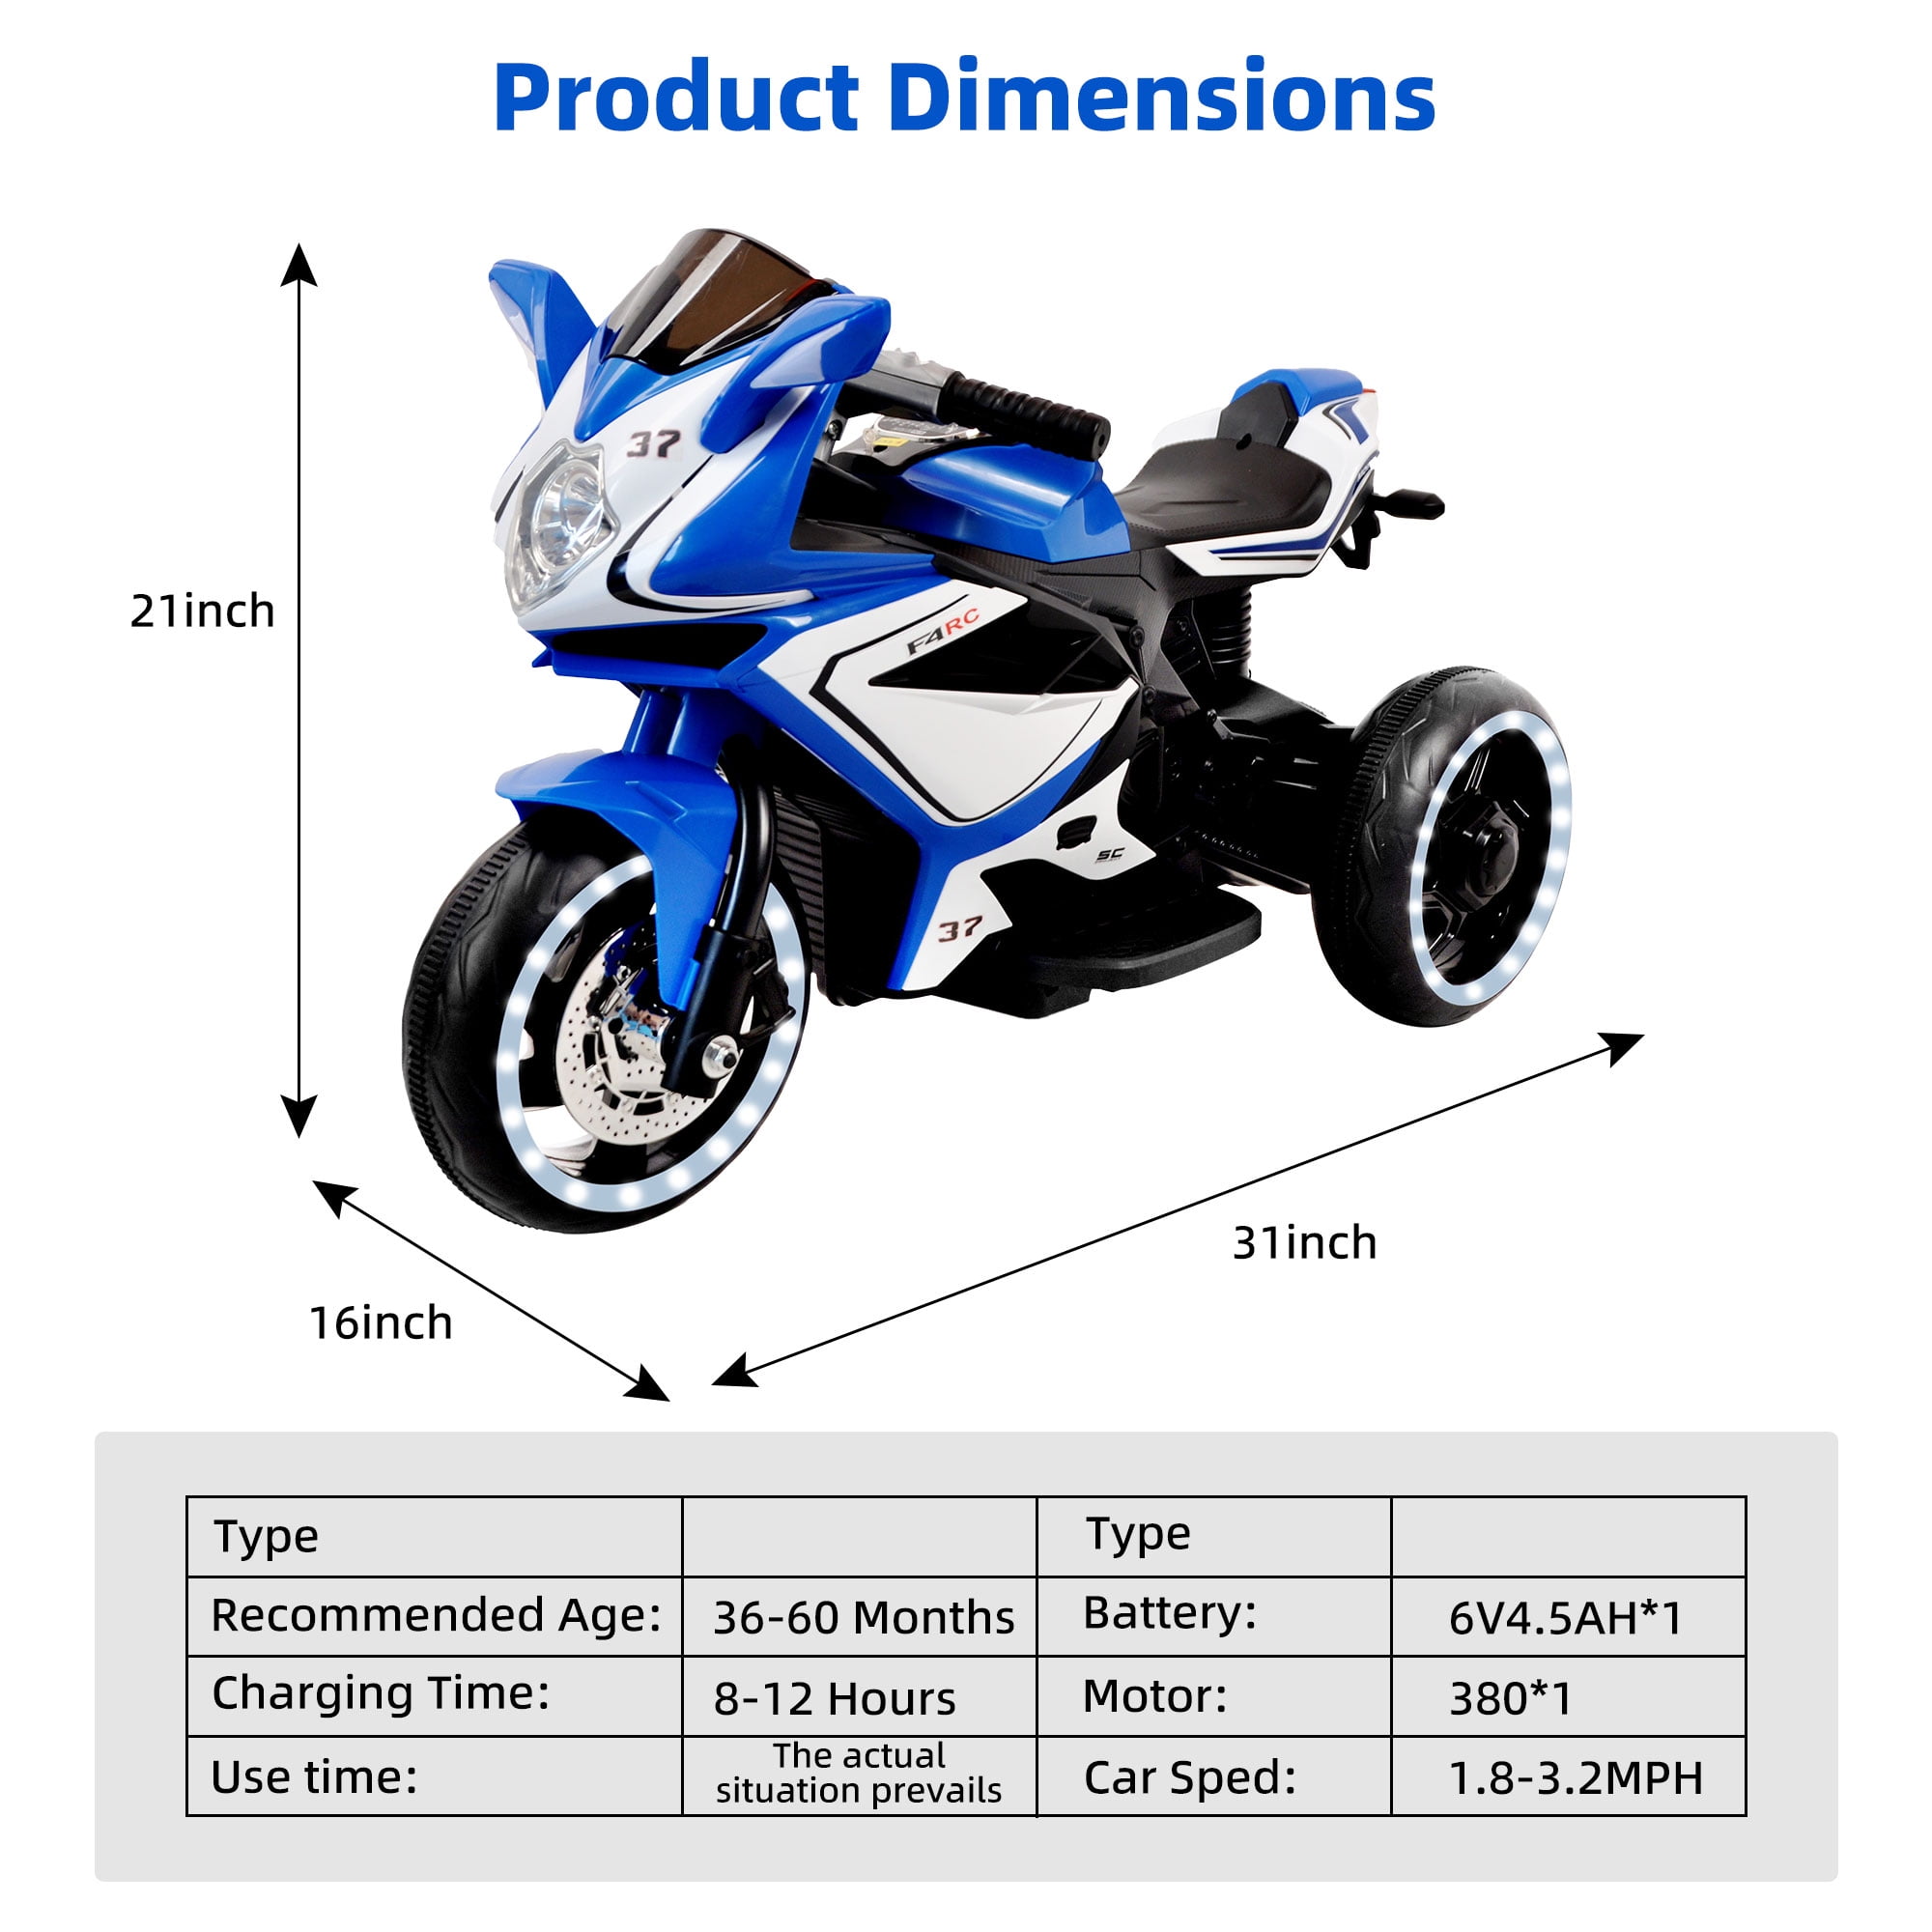 Moto Électrique Ricky Zoom 6V 800012820 Feber 102 x 53 x 66 cm